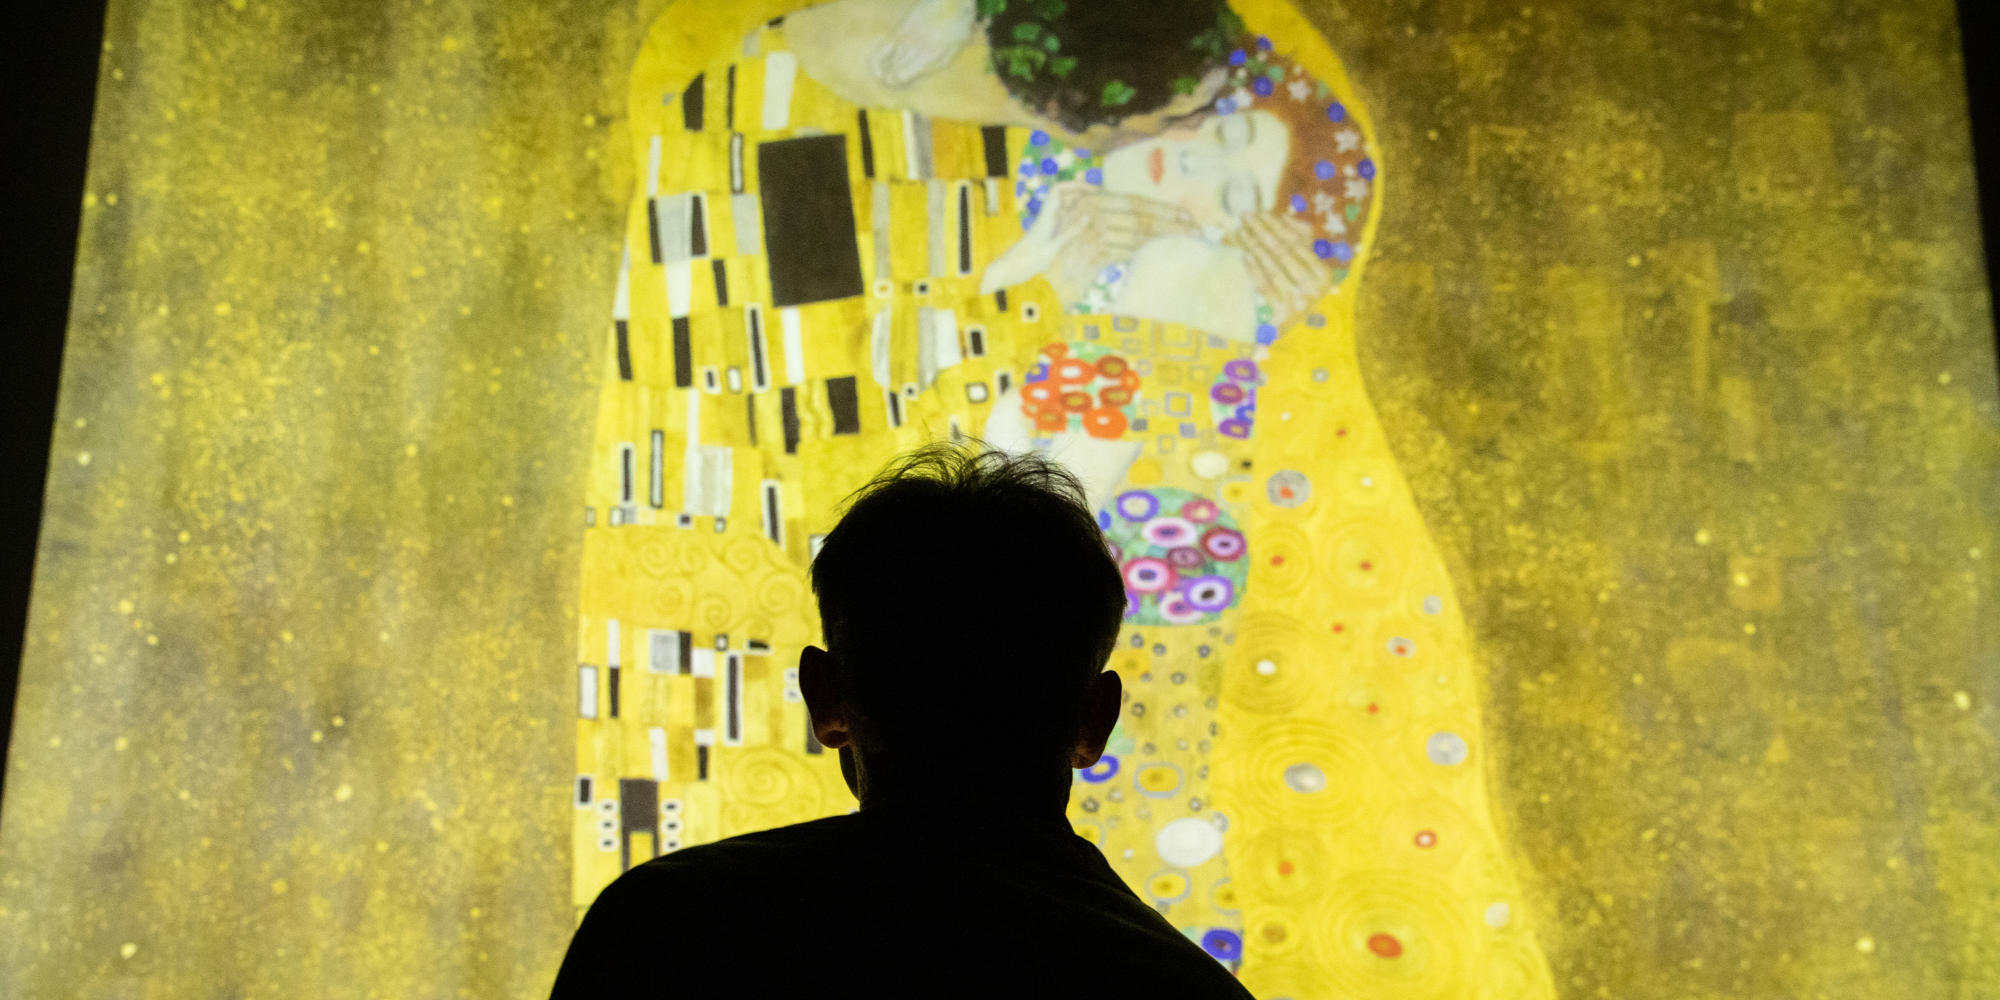 Gustav Klimt’s “Kiss” as Gigapixel / Belvedere, Franz Smola (AT)